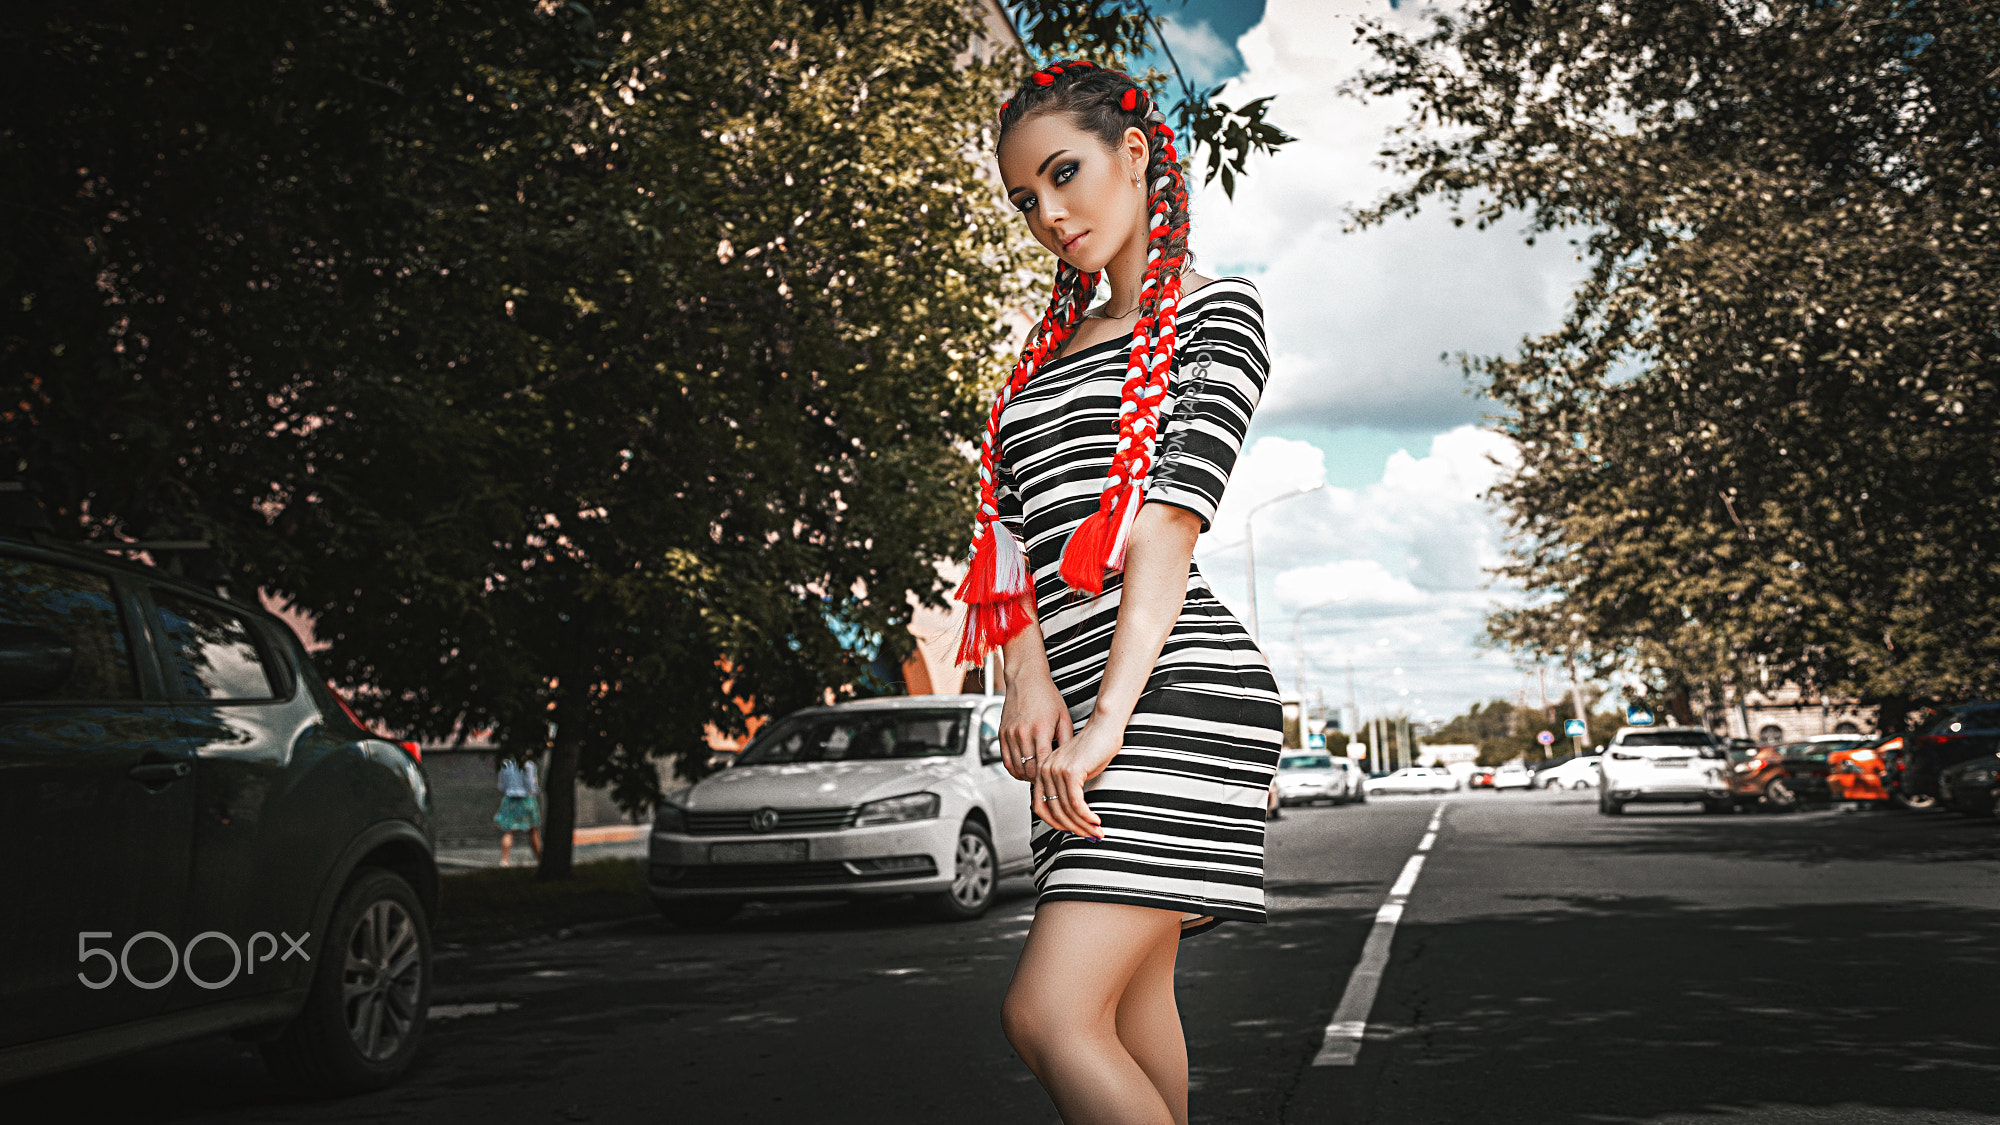 Anton Harisov Women Braids Long Hair Dyed Hair Dress Stripes Makeup Street Car 2000x1125